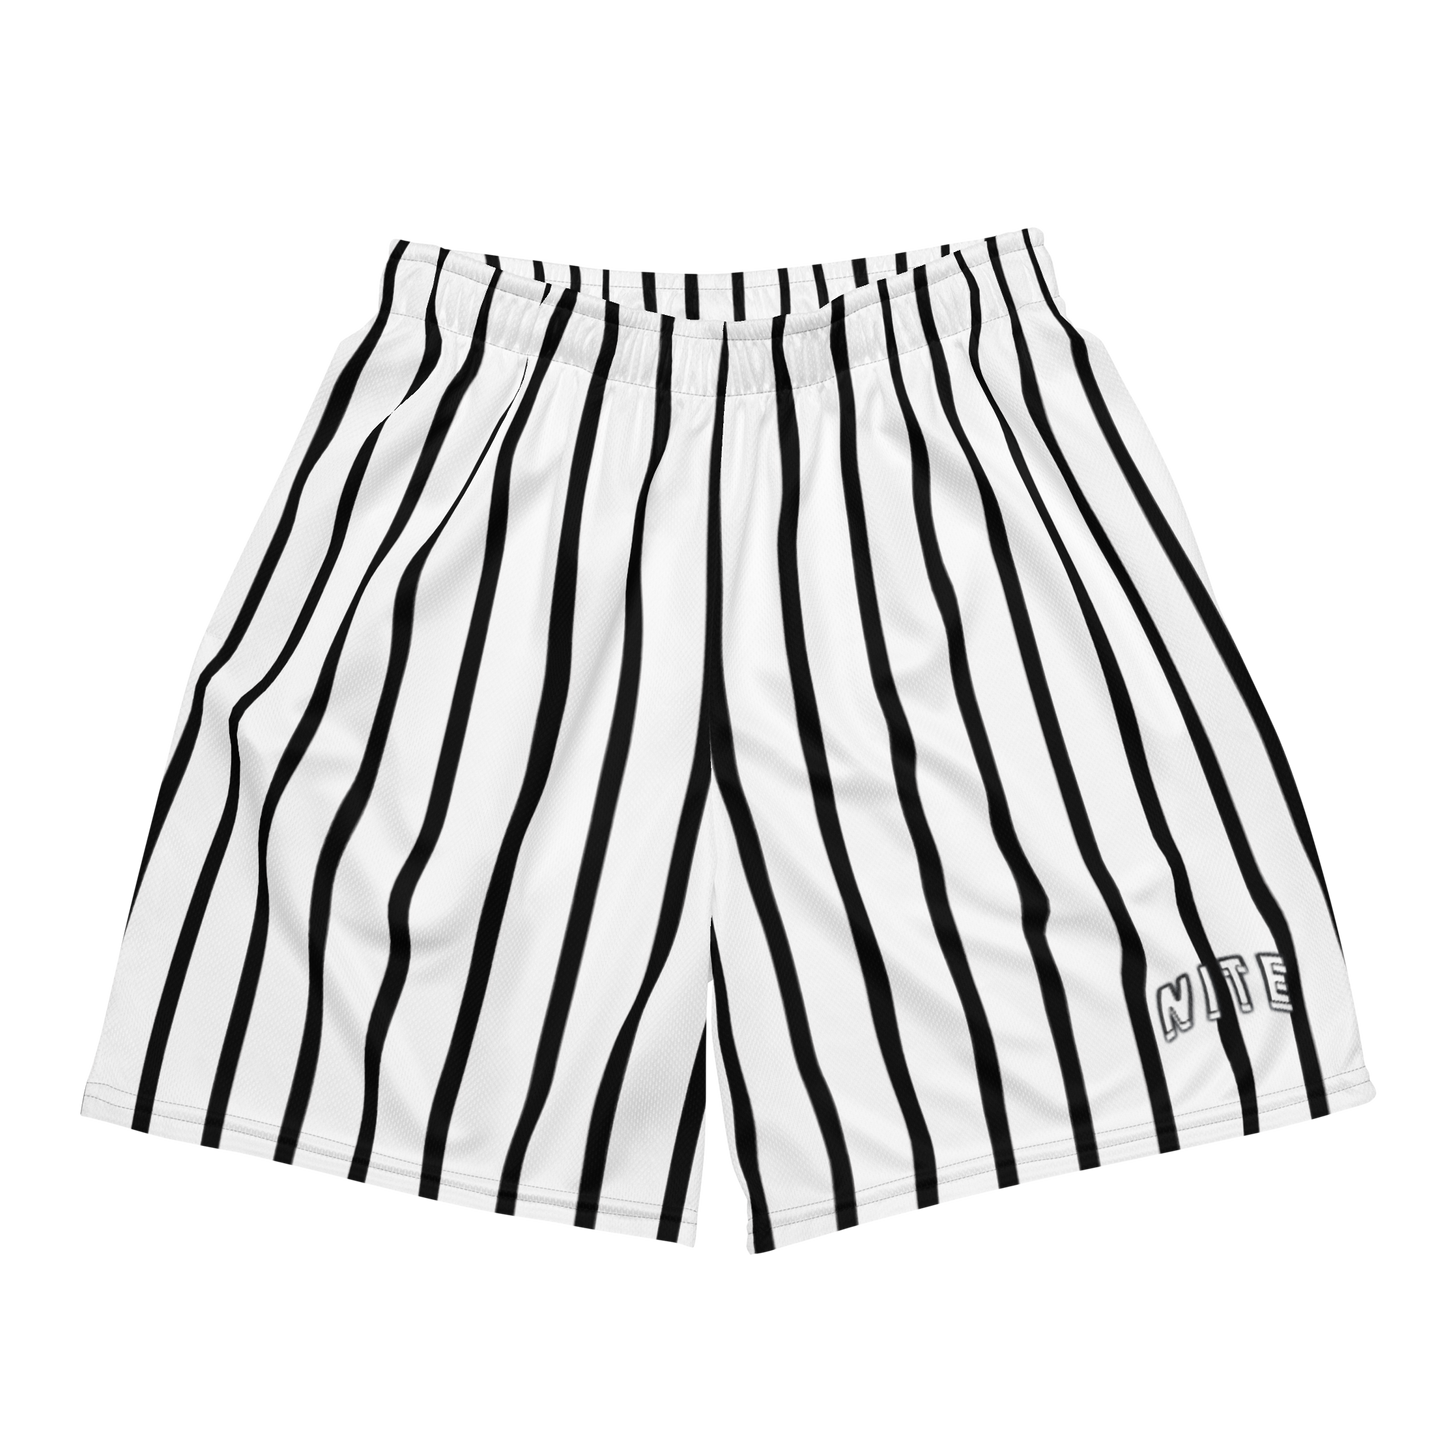 Pinstripe Shorts